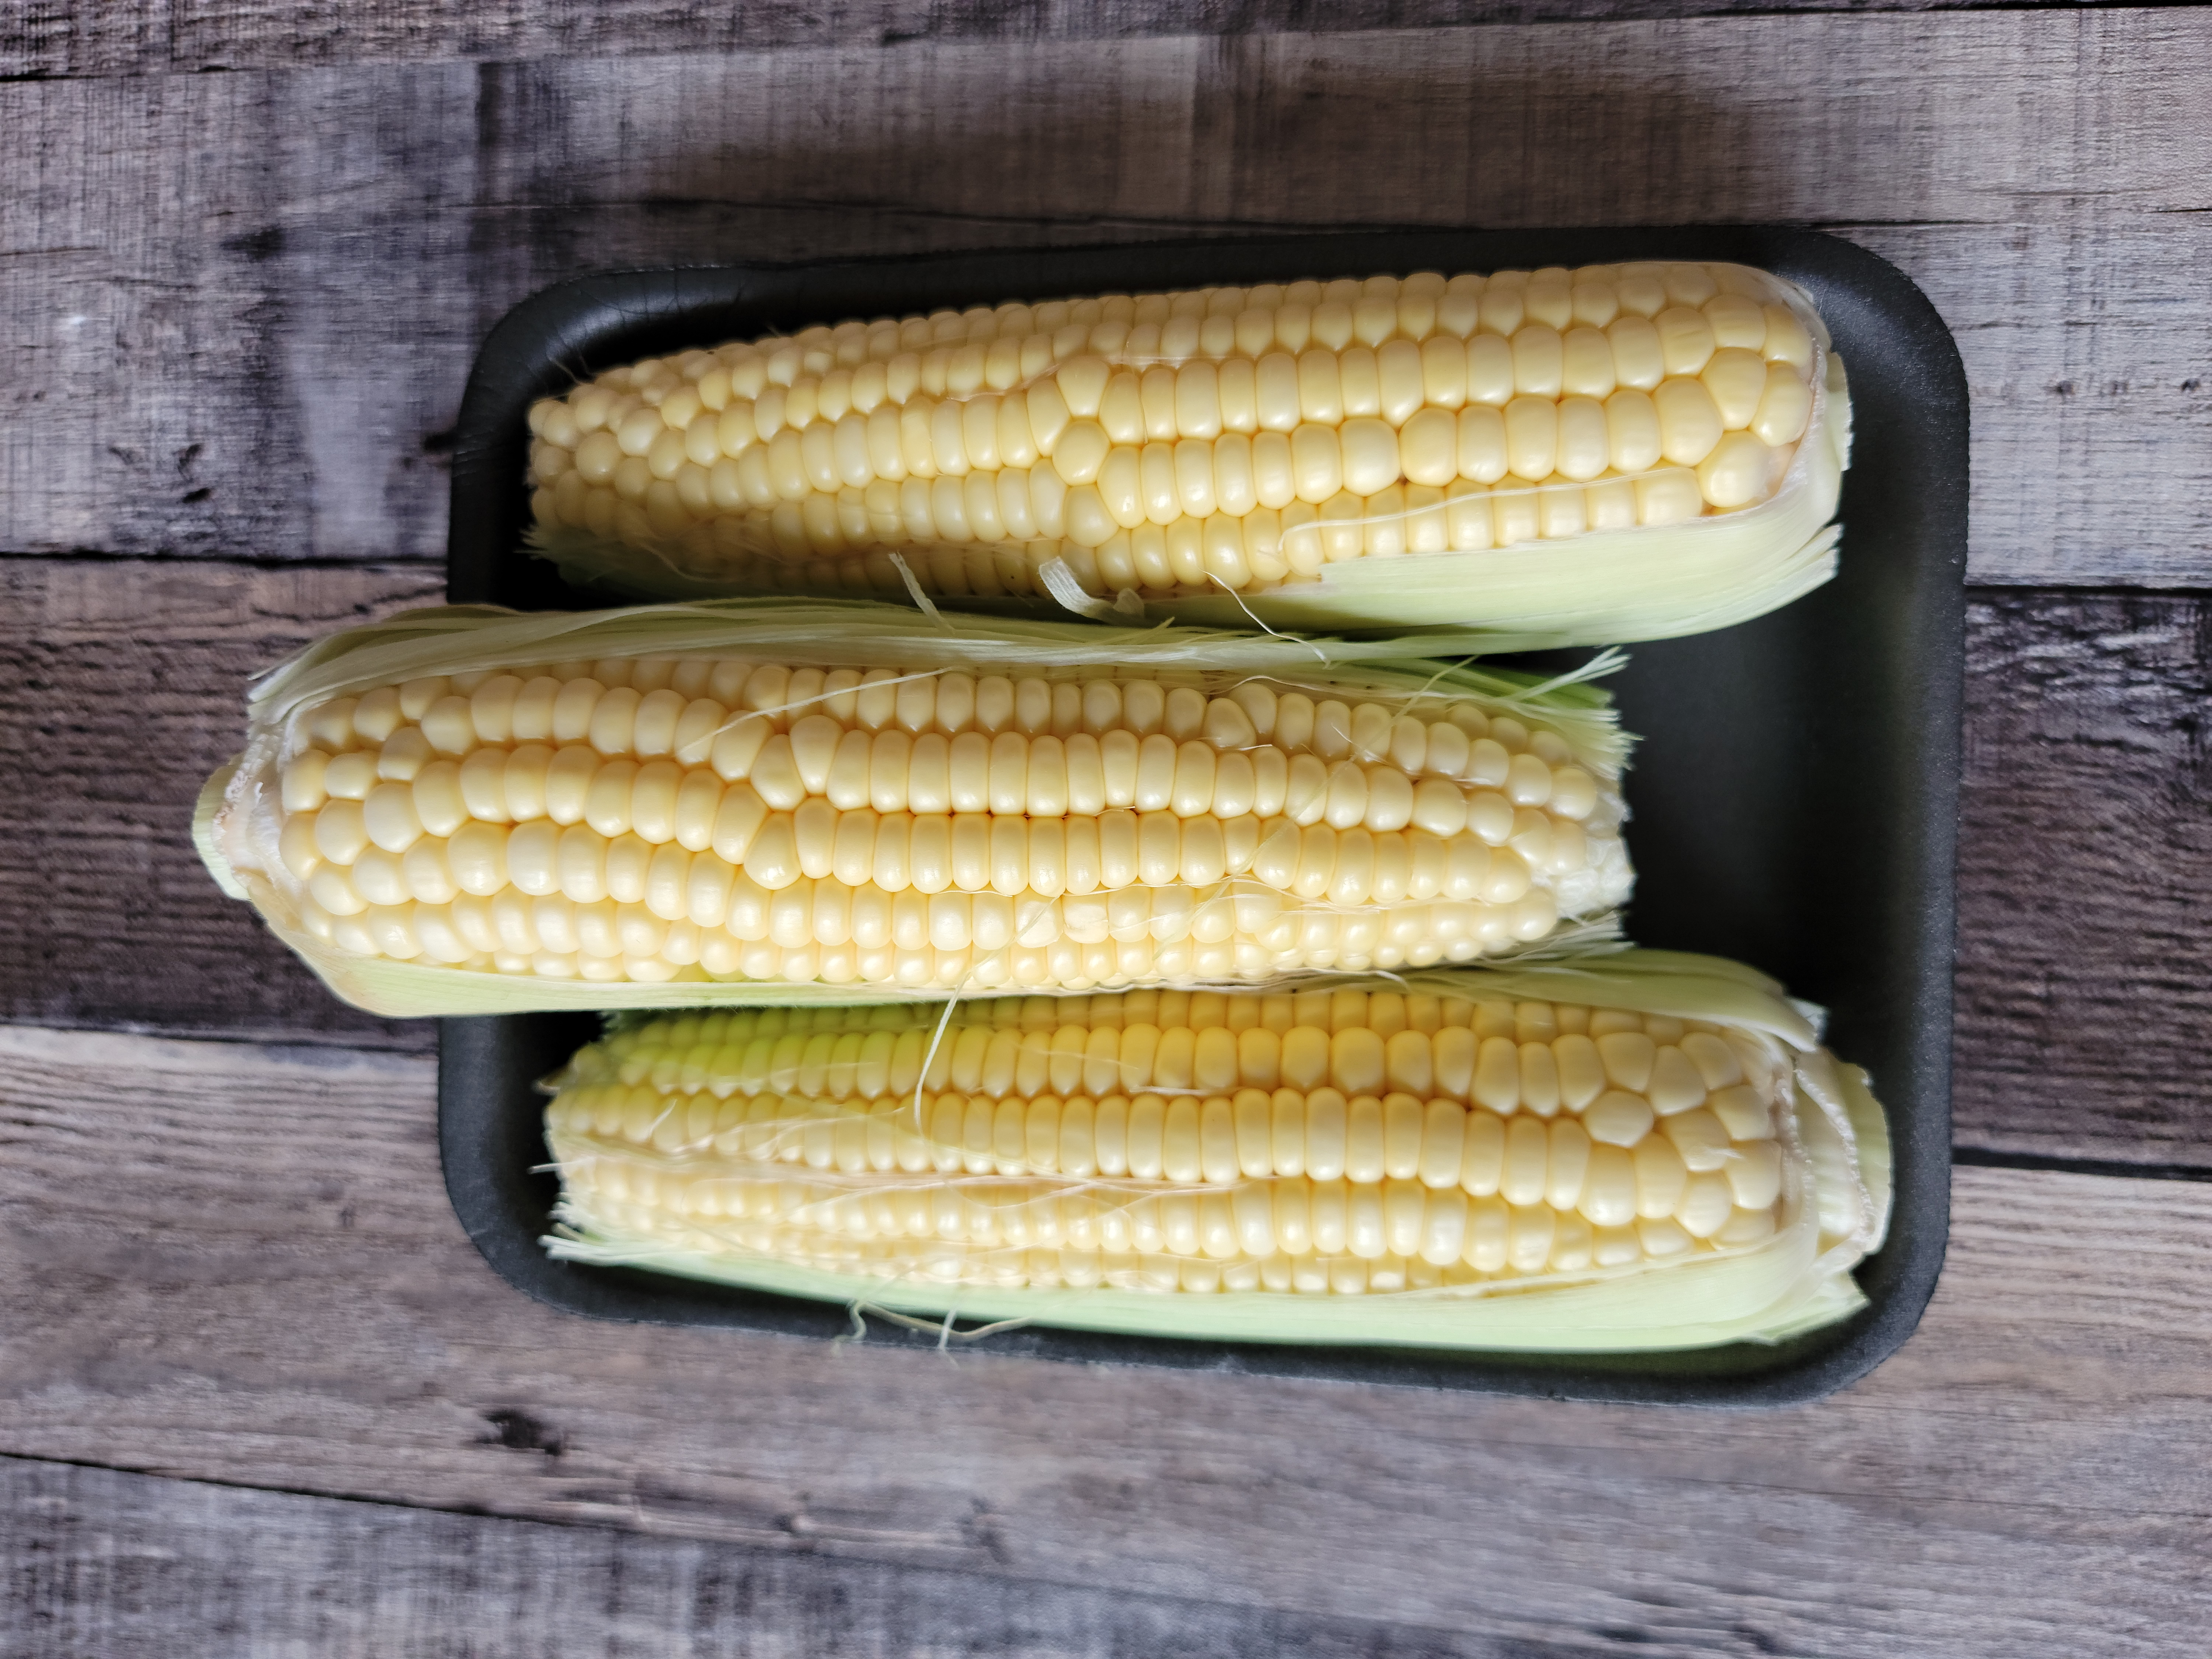 Fresh Midwest corn!